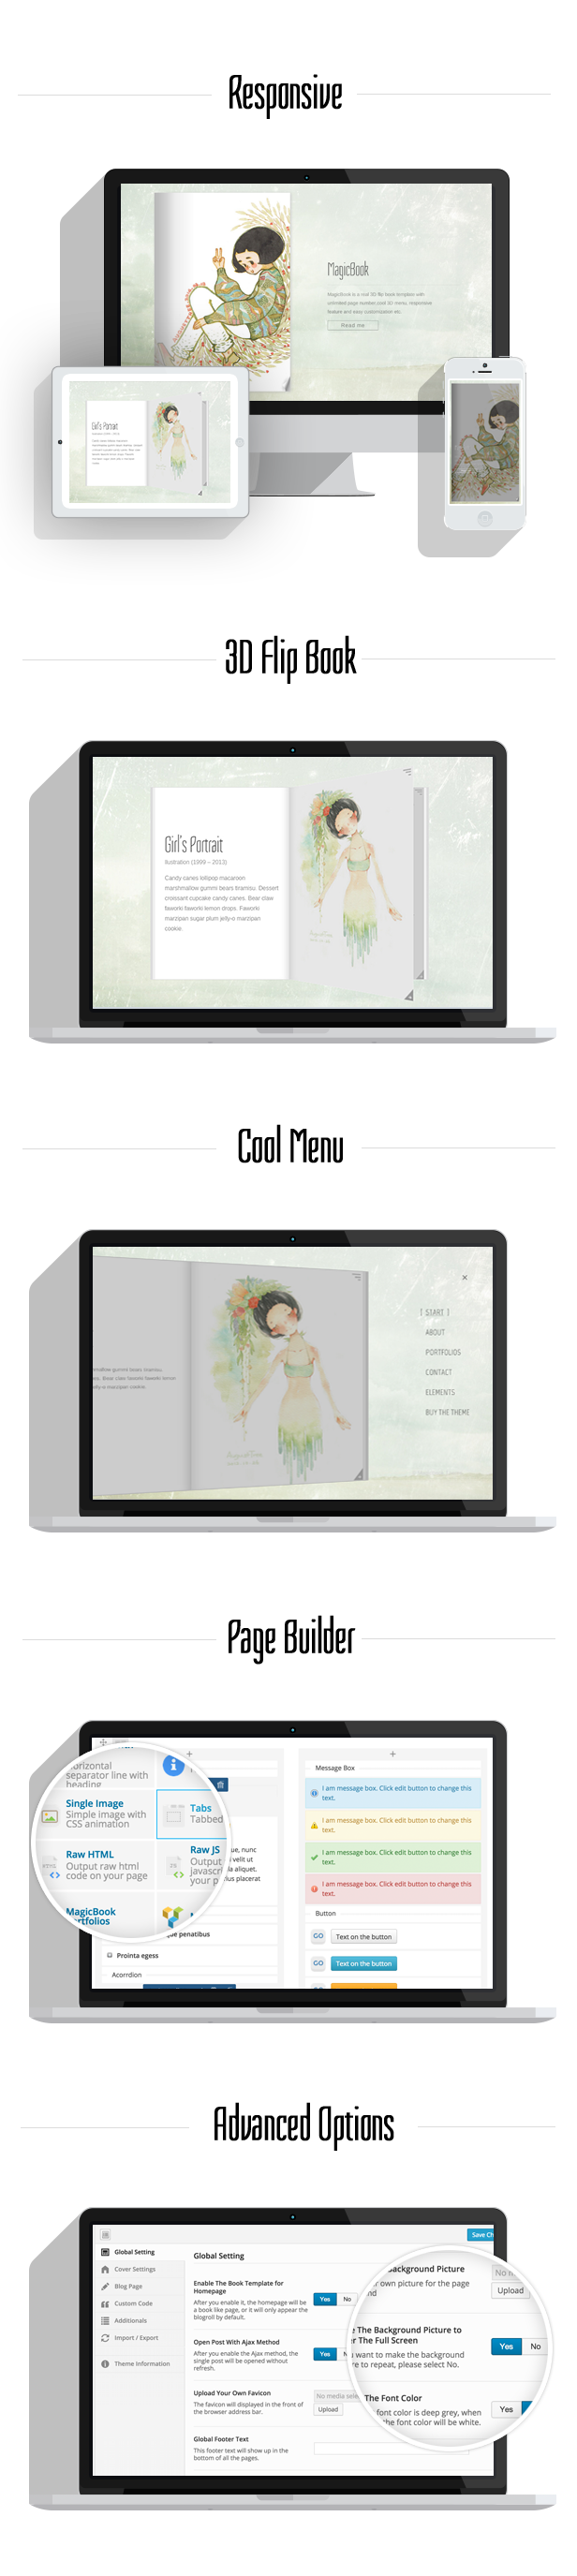 MagicBook - A 3D Flip Book WordPress Theme - 5